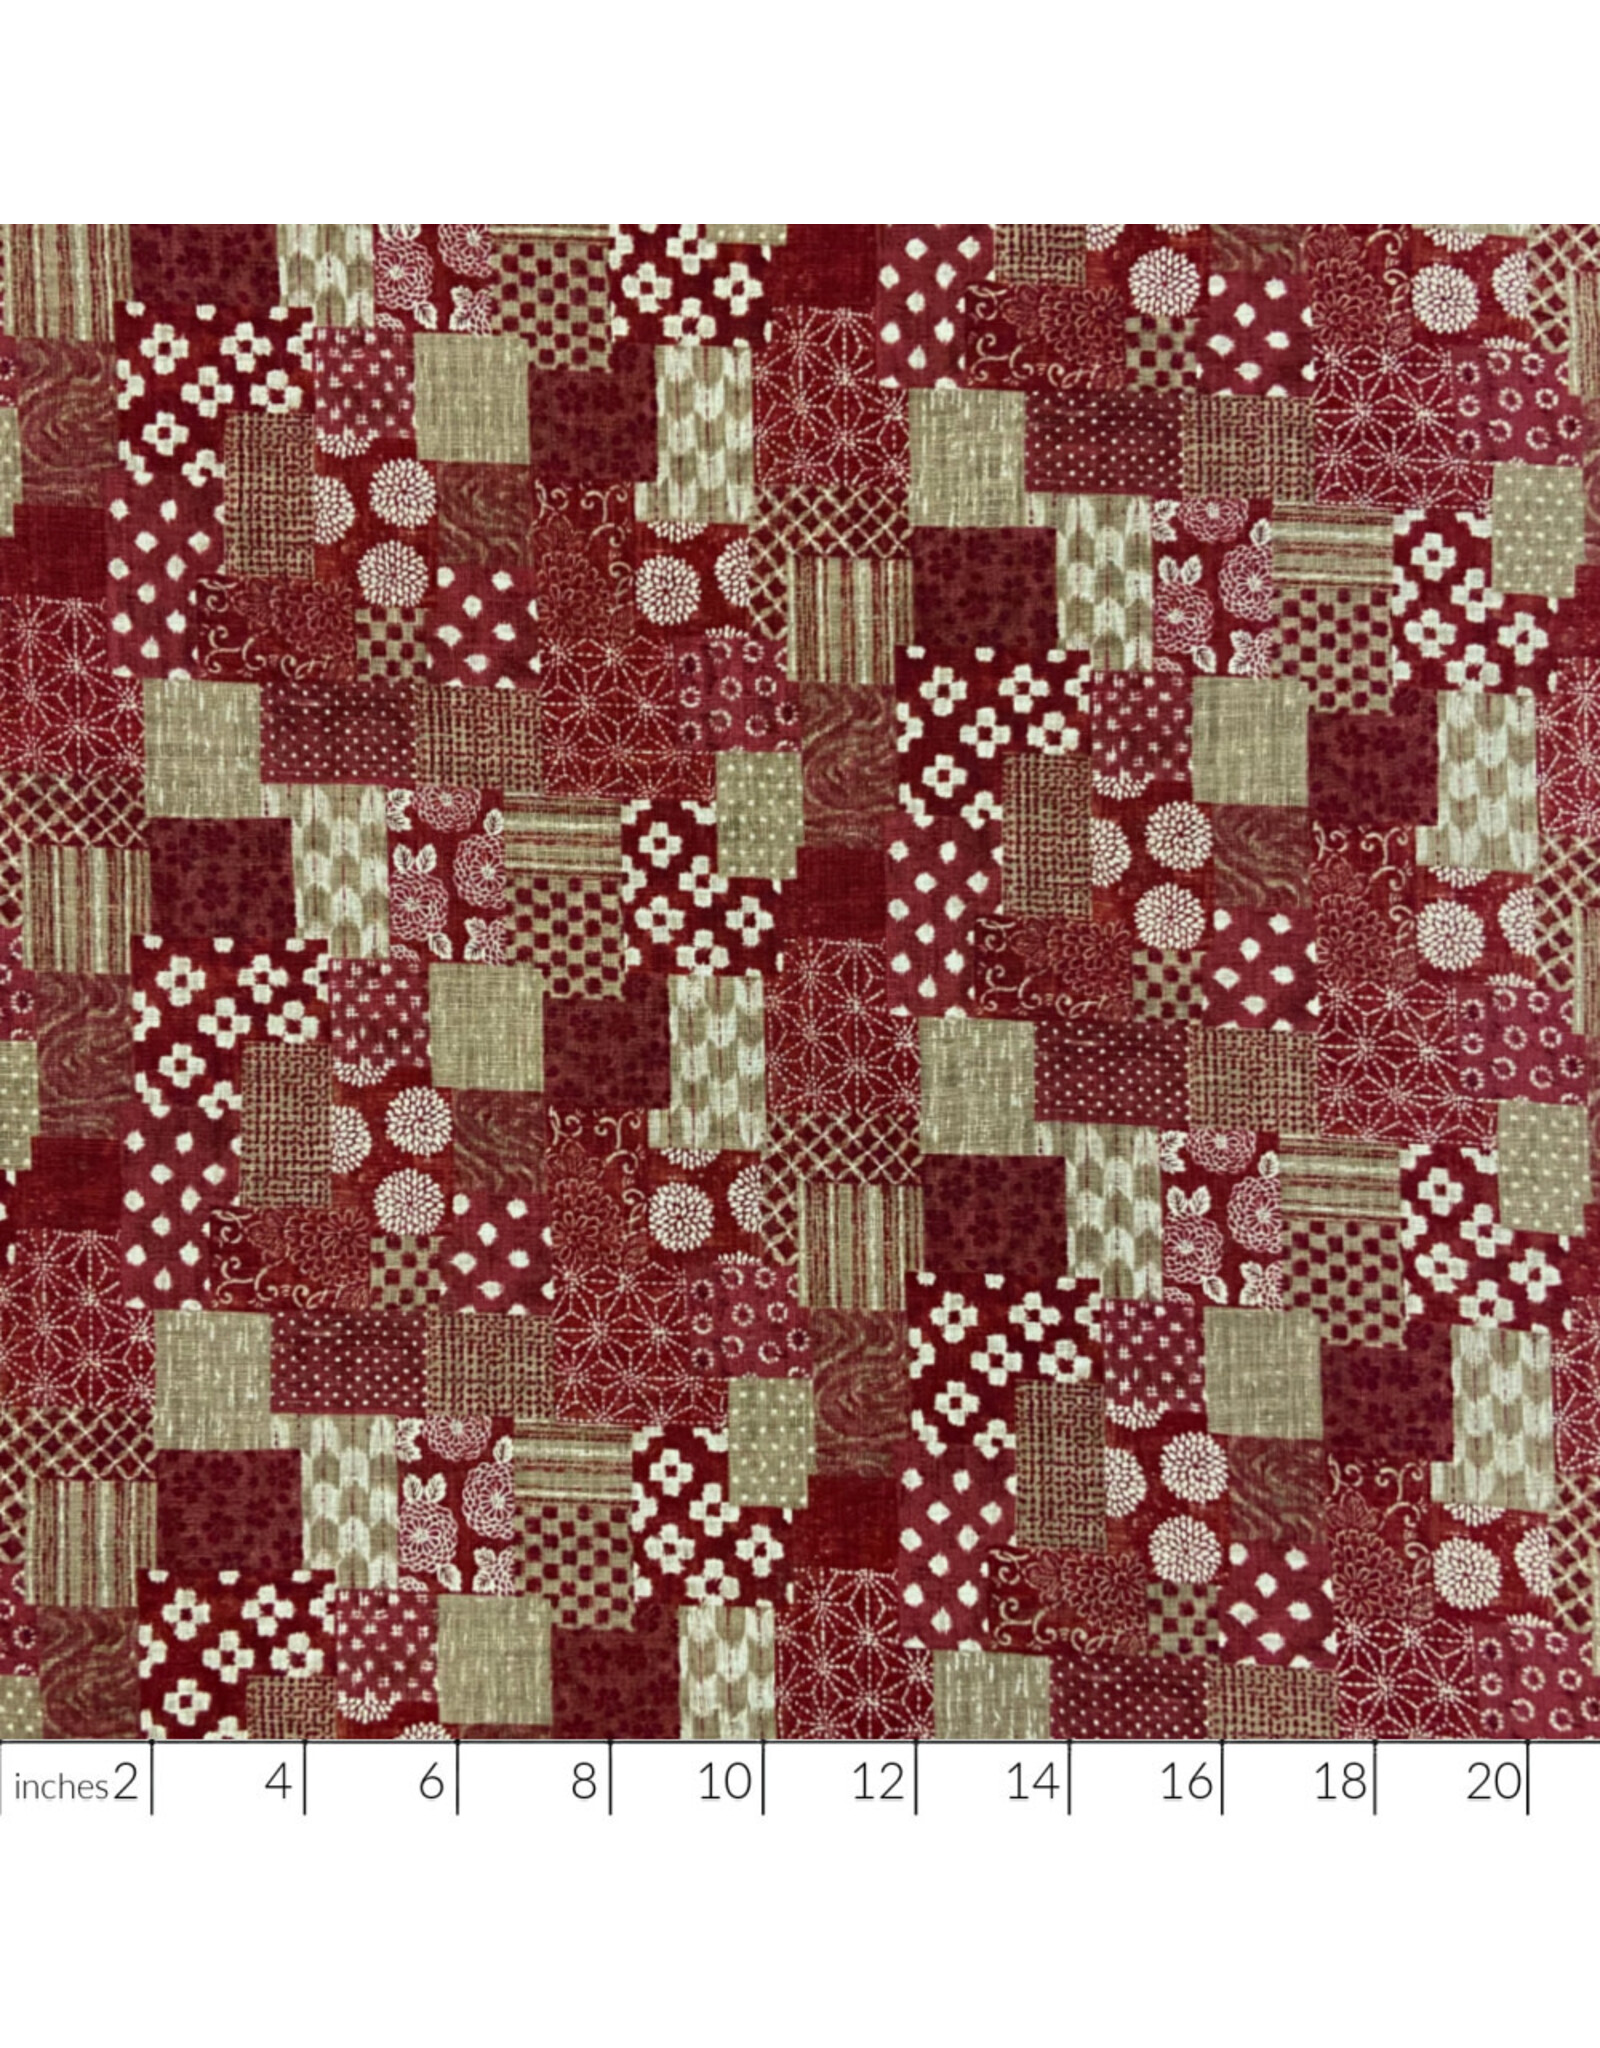 Sevenberry Nara Homespun, Faux-Boro in Red & Beige, Fabric Half-Yards